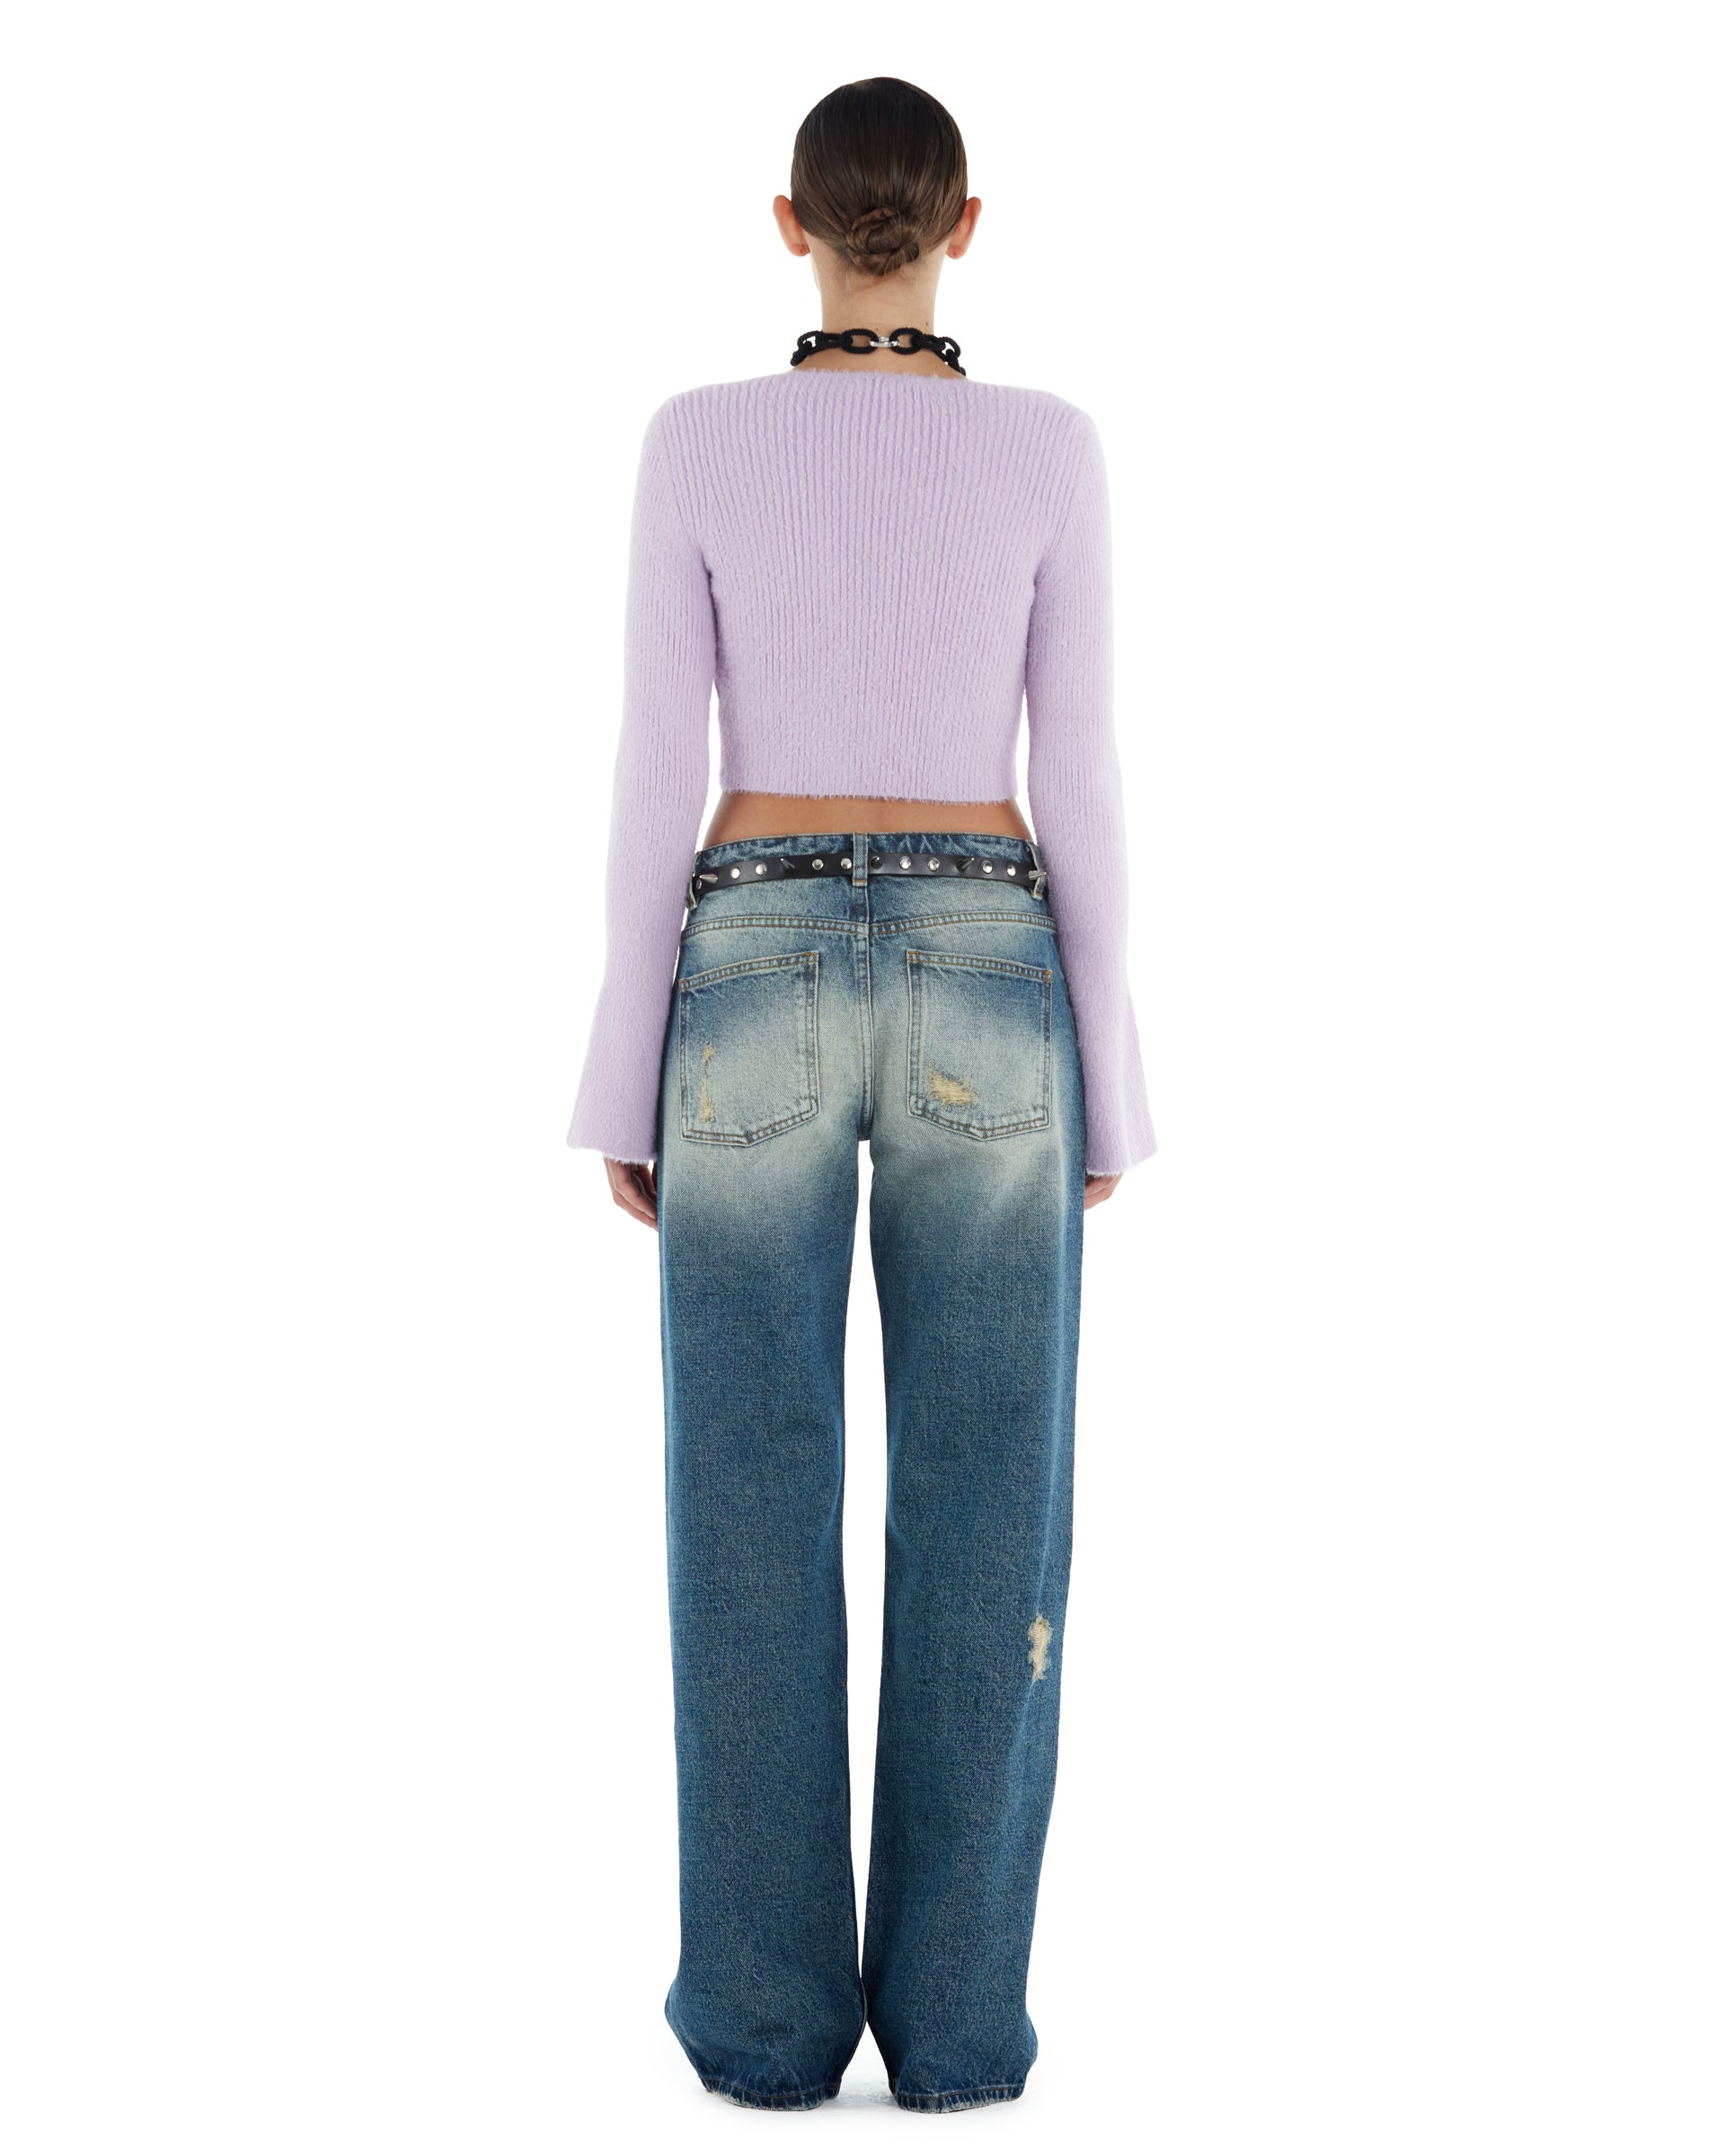 Lesley Jeans Option 5